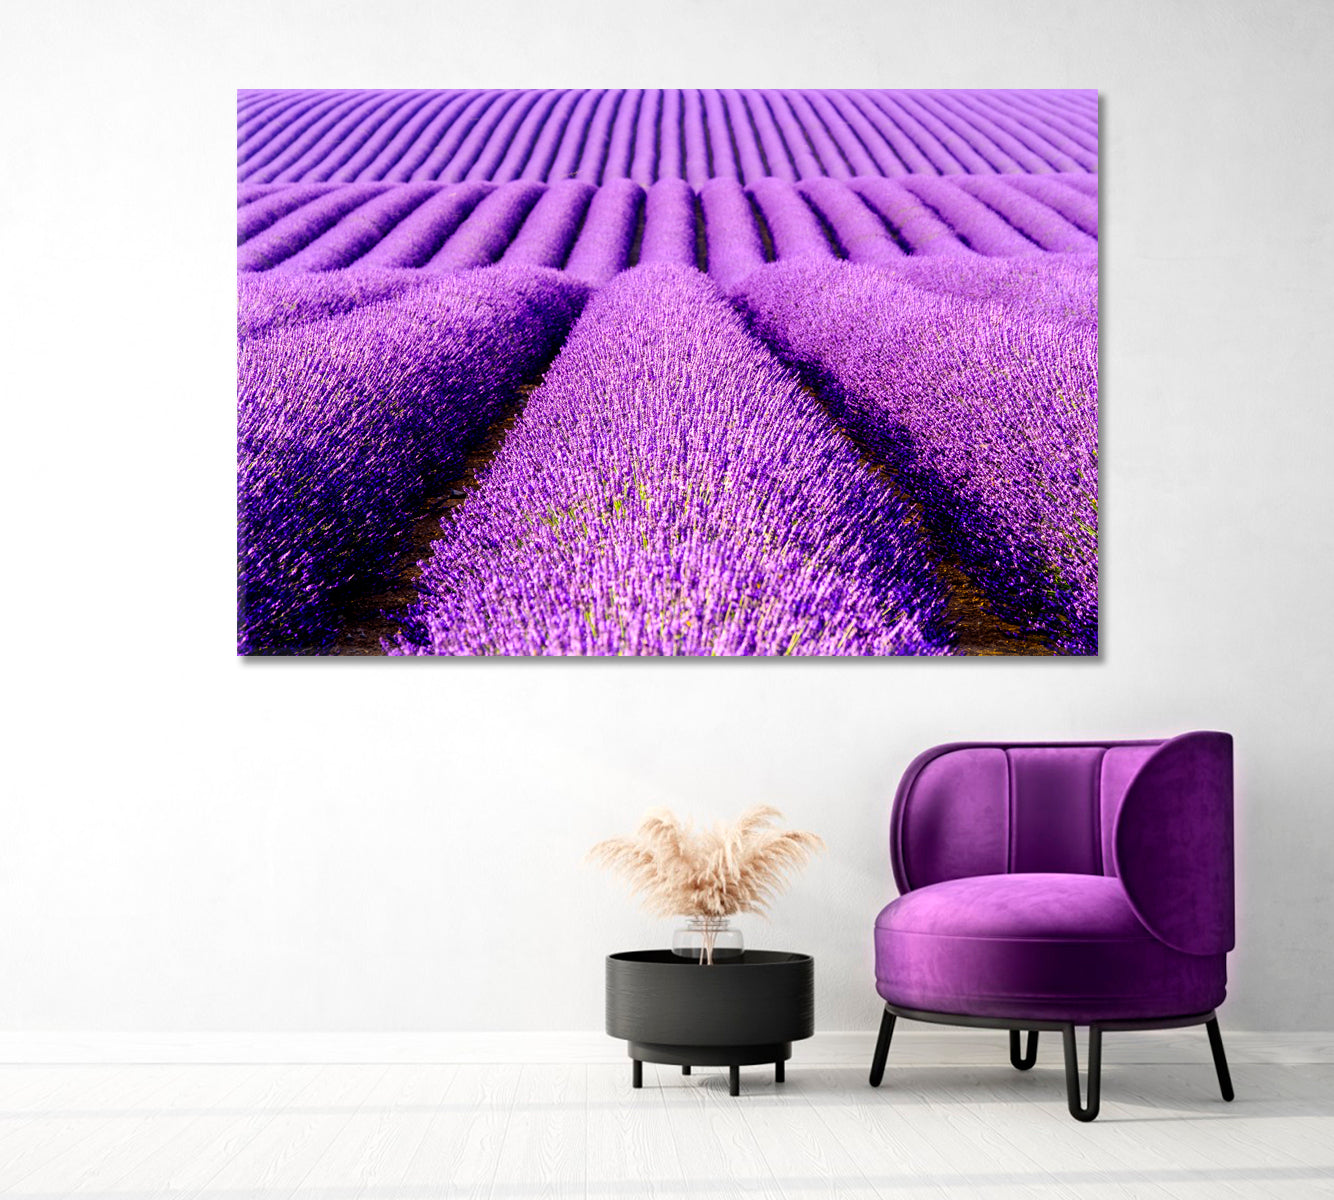 Endless Lavender Field Provence France Canvas Print-Canvas Print-CetArt-1 Panel-24x16 inches-CetArt